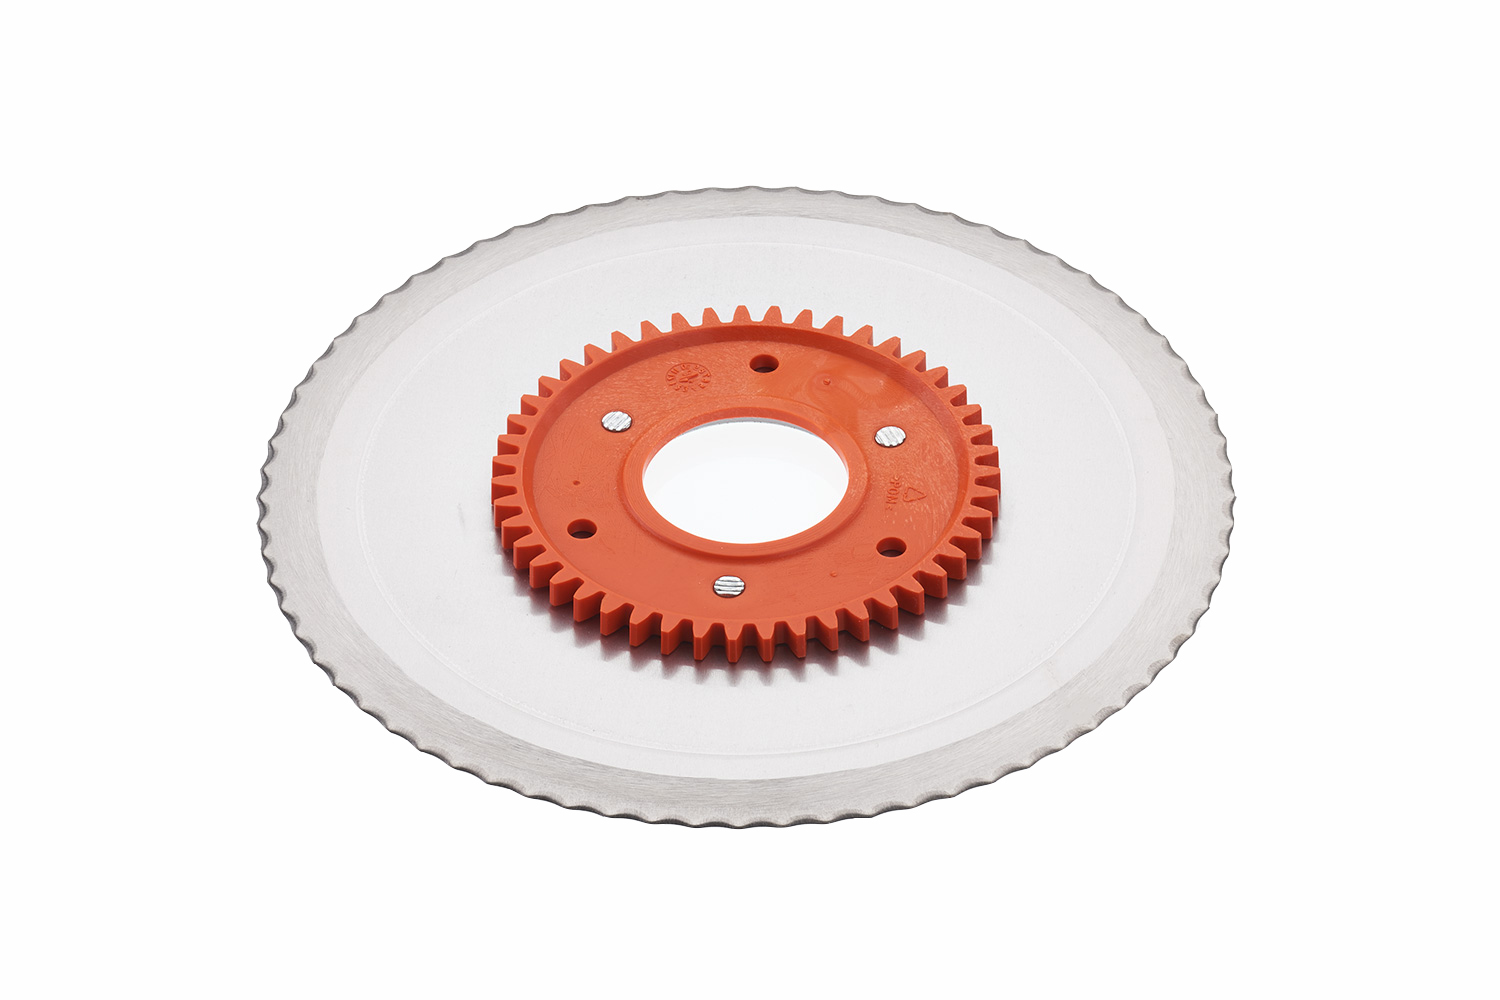 Standard serrated circular blade with an orange gear